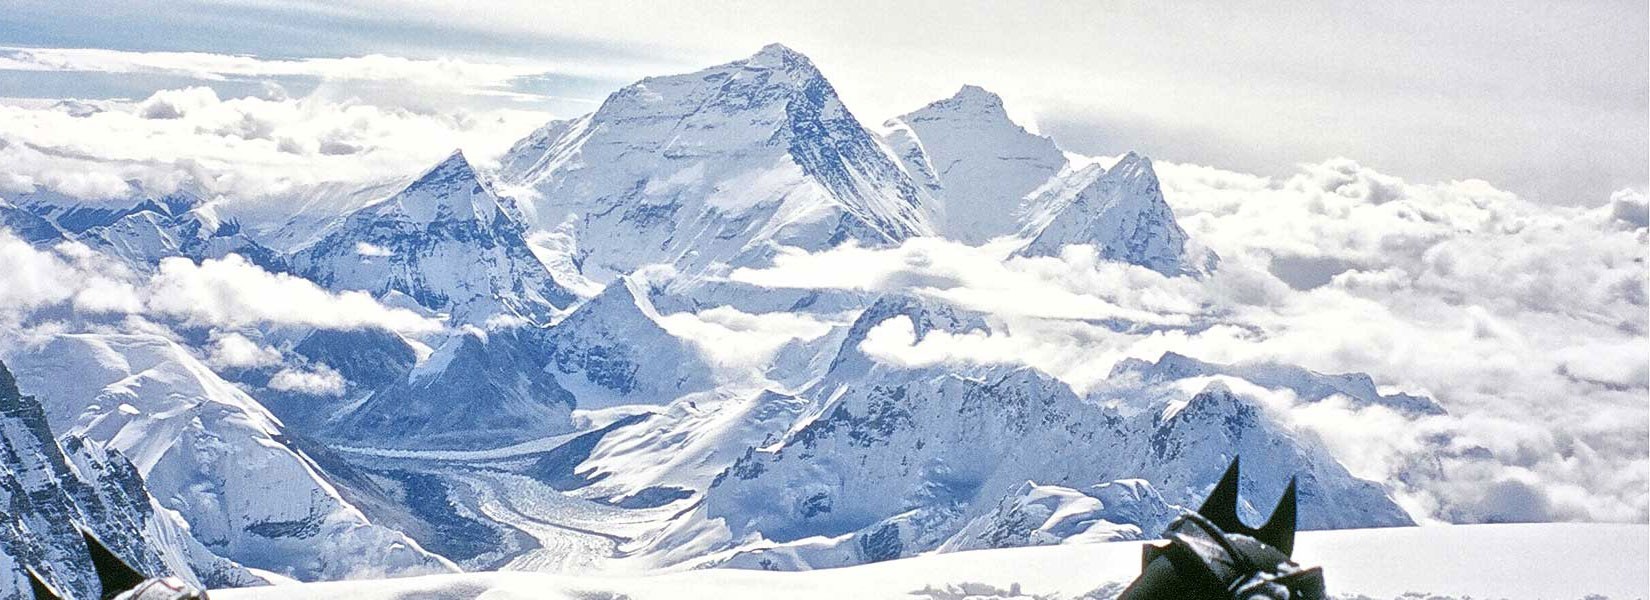 Nuptse, Everest & Lhotse from Cho Oyu